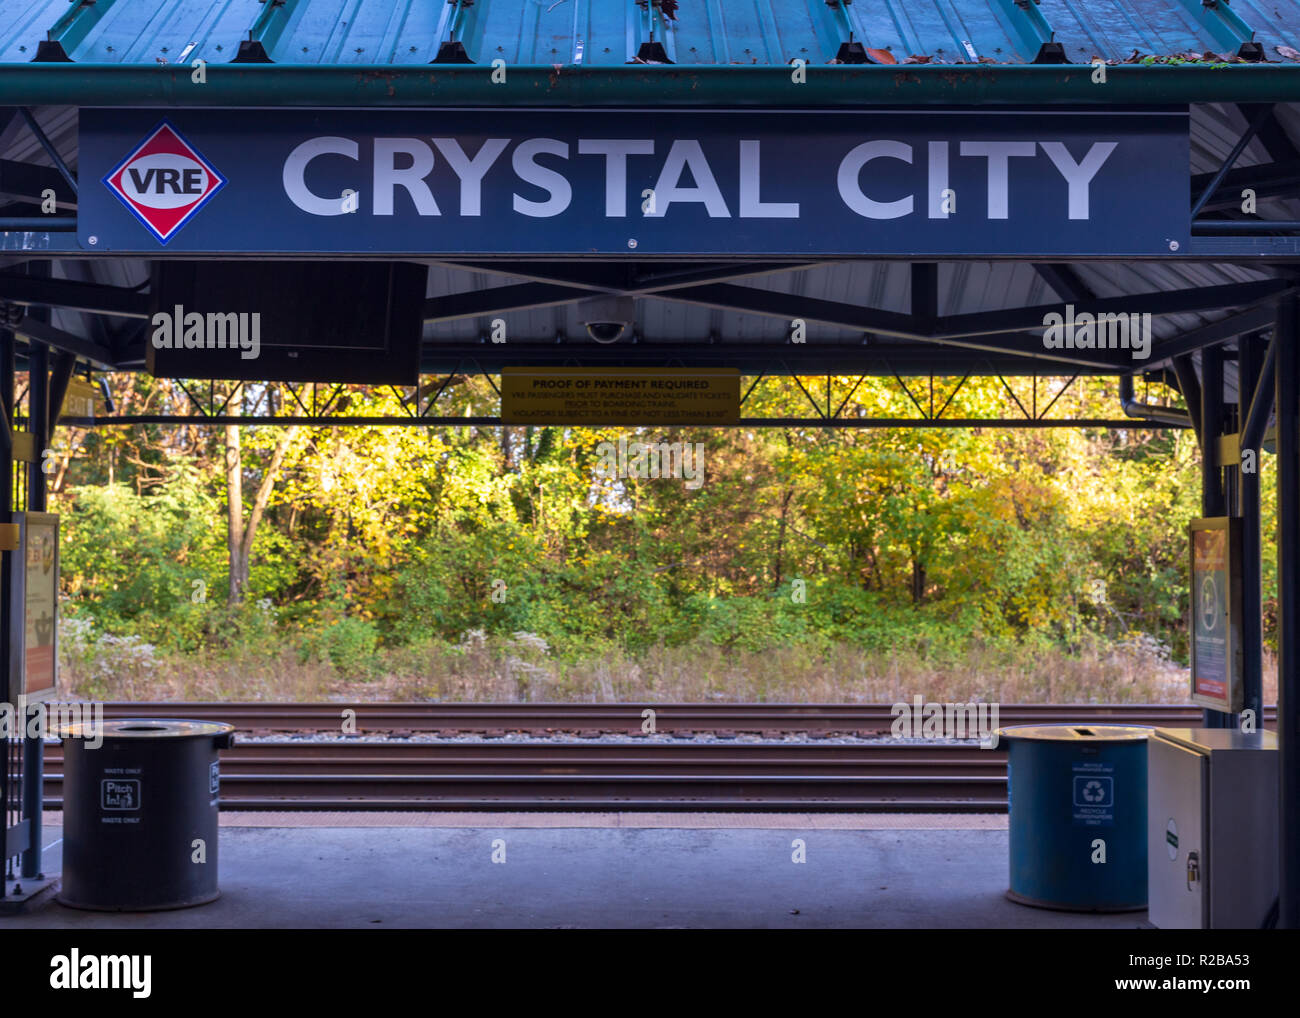 ARLINGTON, V.A. - NOVEMBER 17 2018: Virginia Railway Express commuter rail station in Crystal City Stock Photo